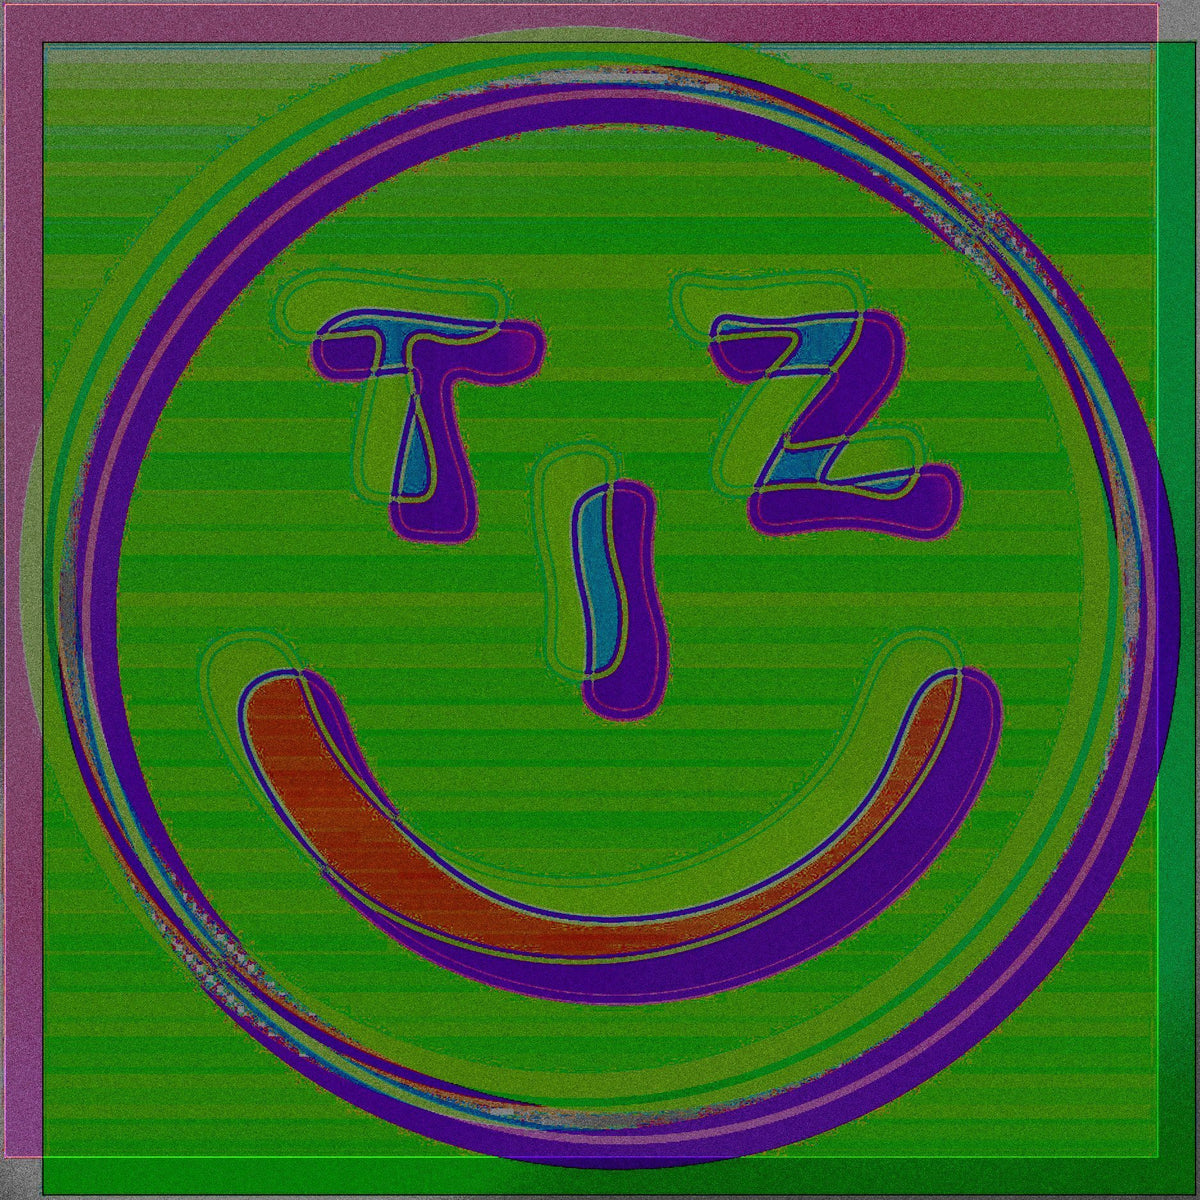 TIZ the Label